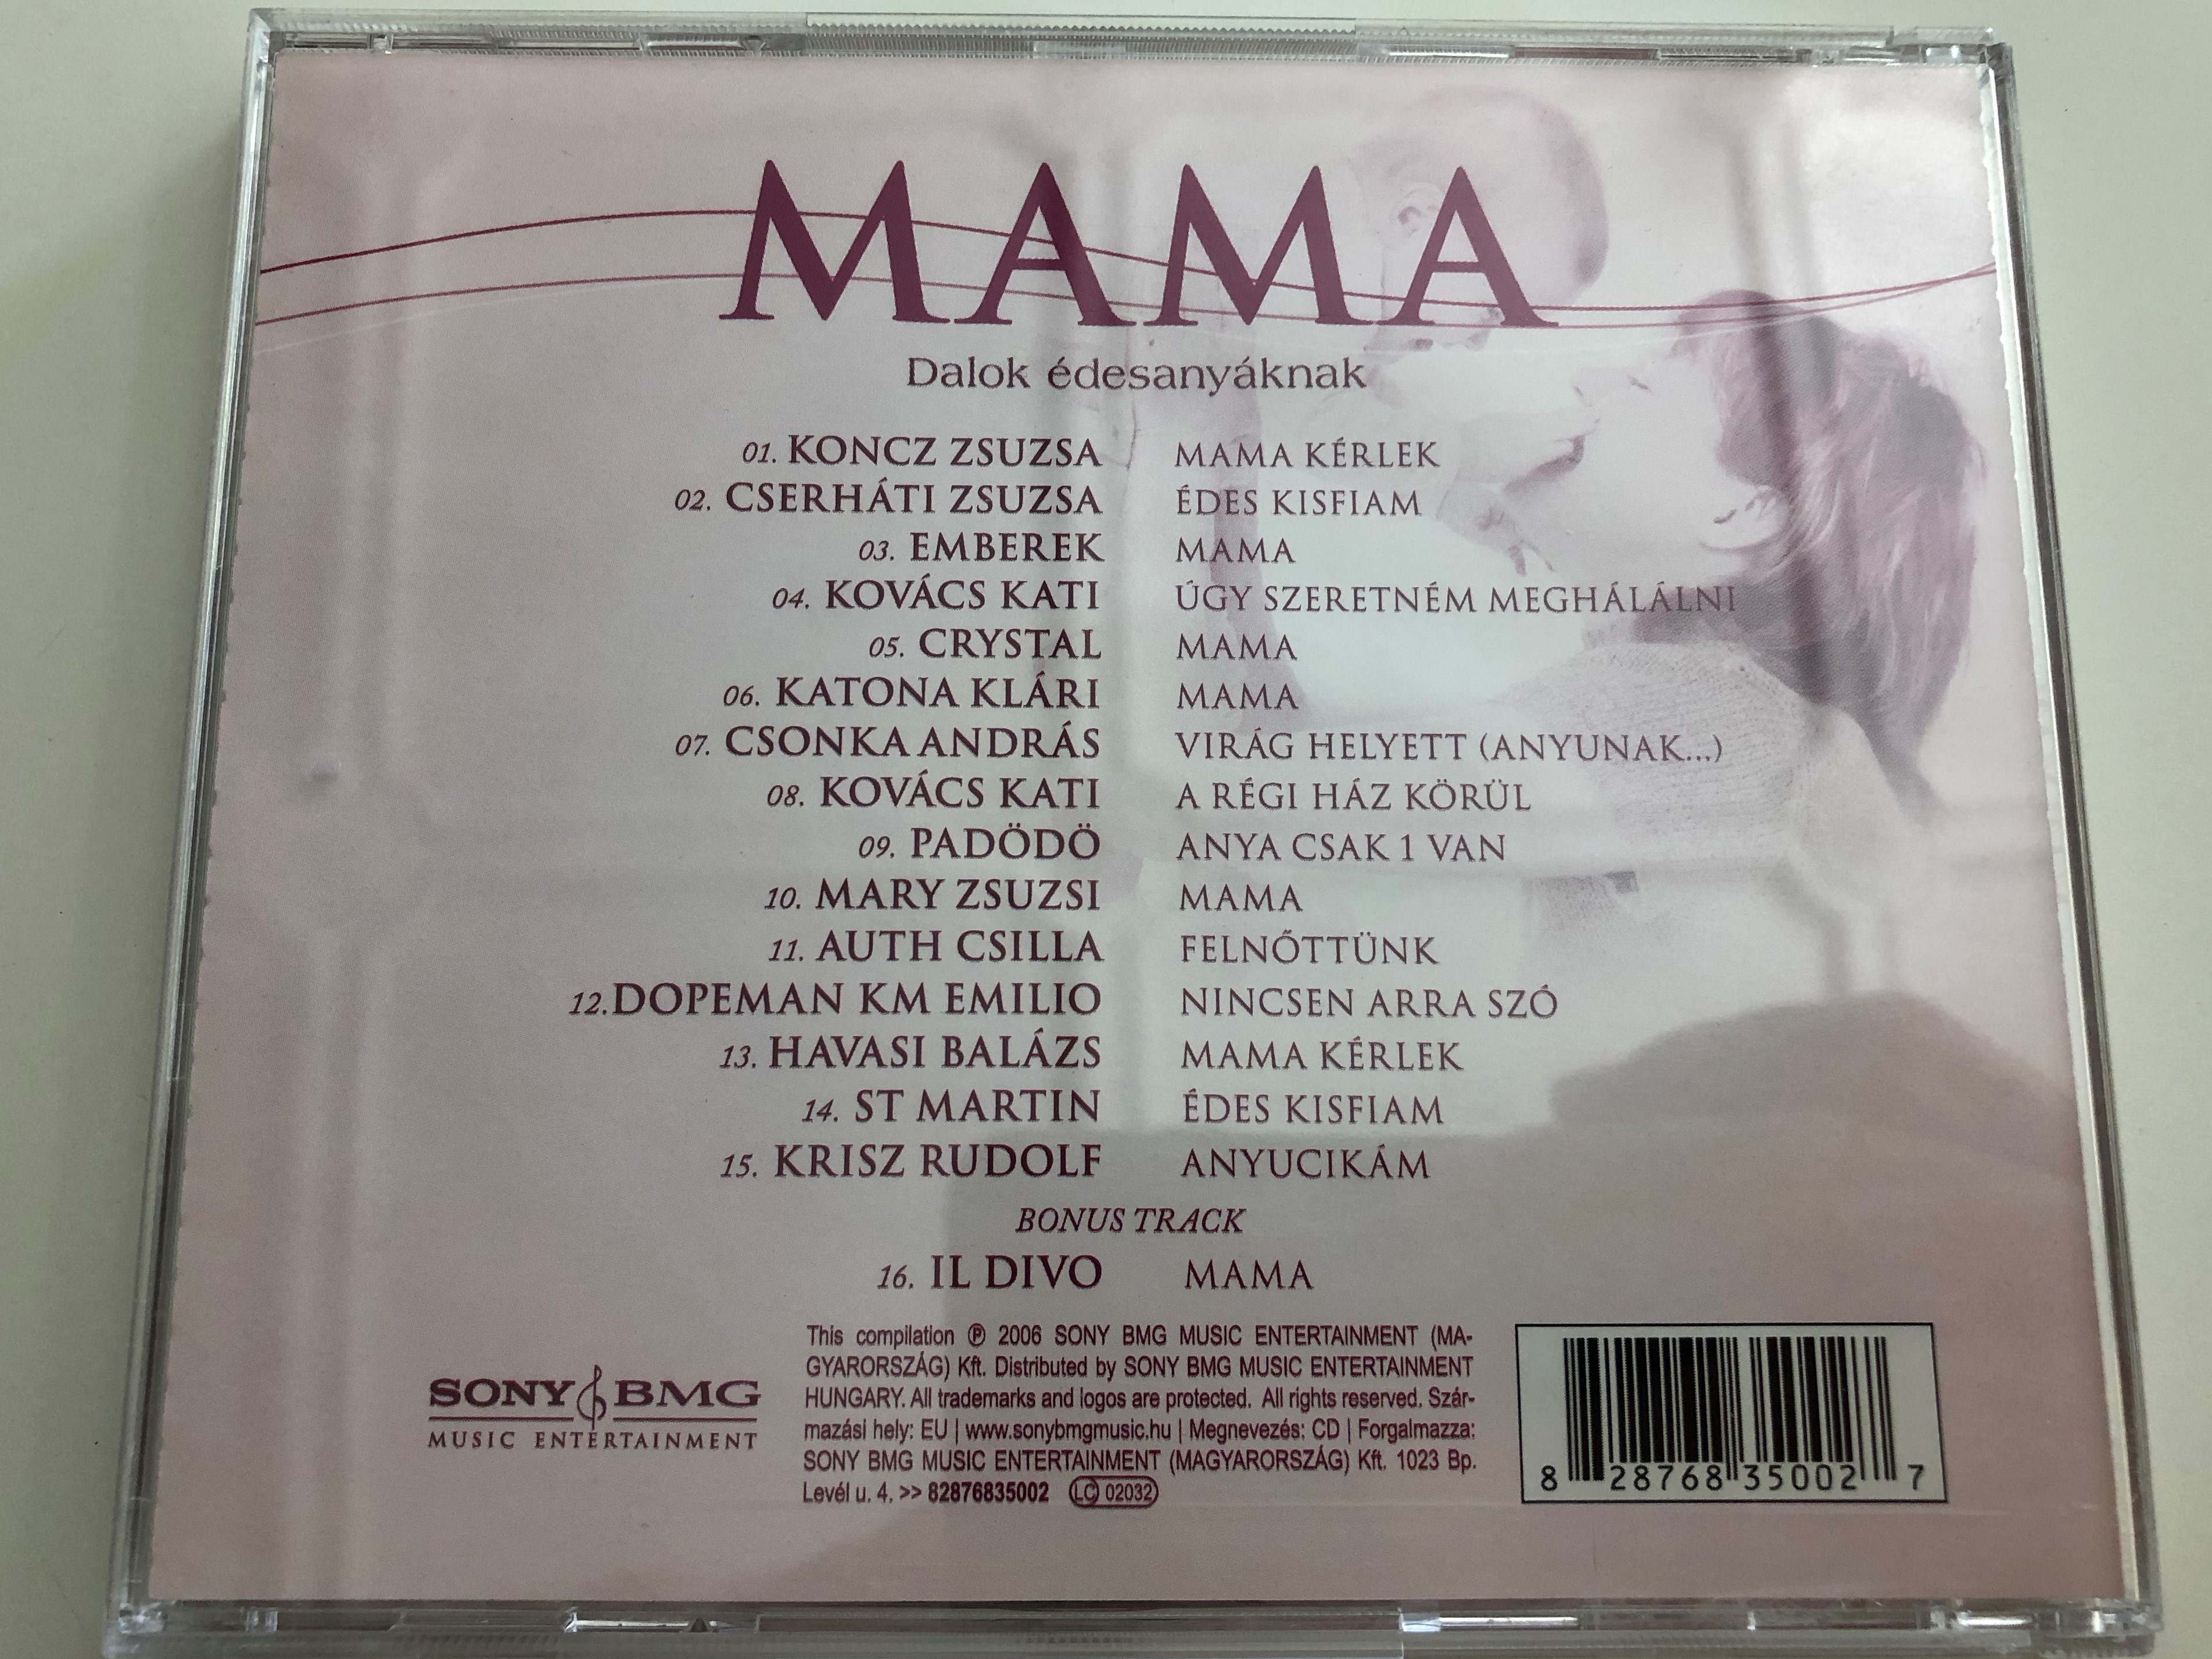 mama-dalok-desany-knak-songs-for-mothers-koncz-zsusza-crystal-emberek-cserh-ti-zsuzsa-csonka-andr-s-bonus-track-il-divo-mama-audio-cd-2006-sony-bmg-5-.jpg